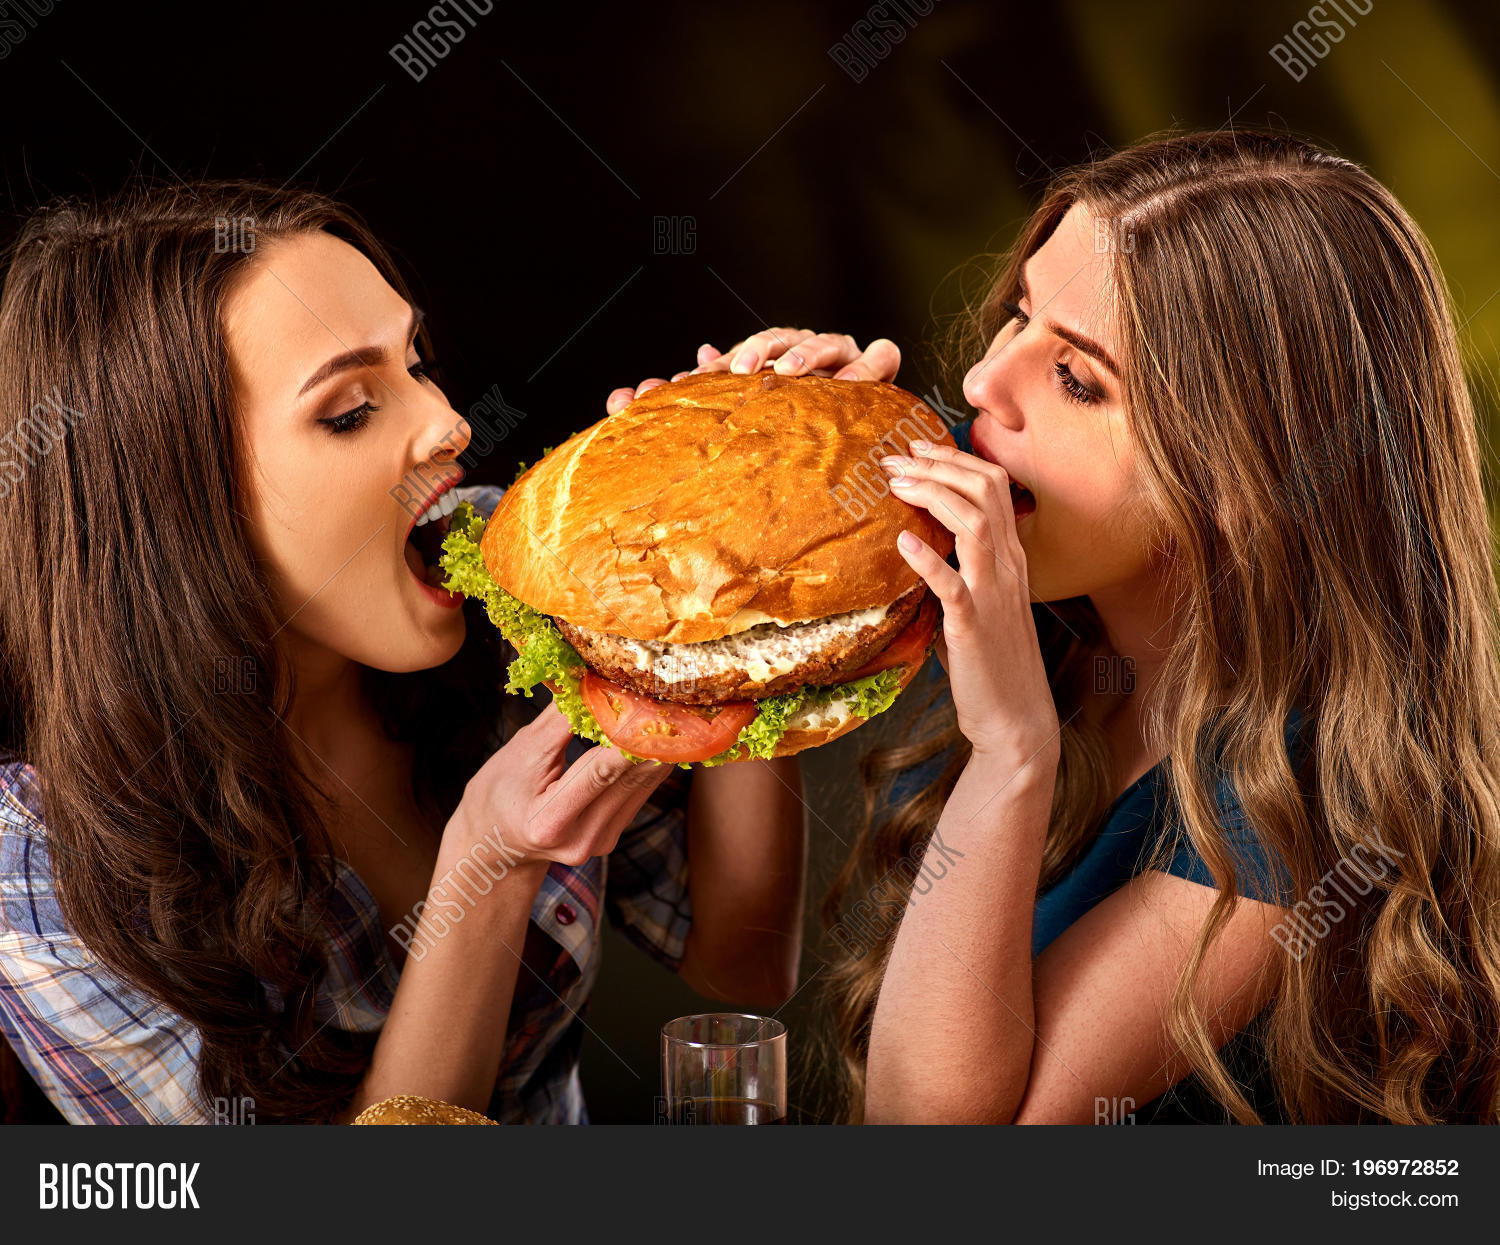 allen brewington add photo two women eating each other